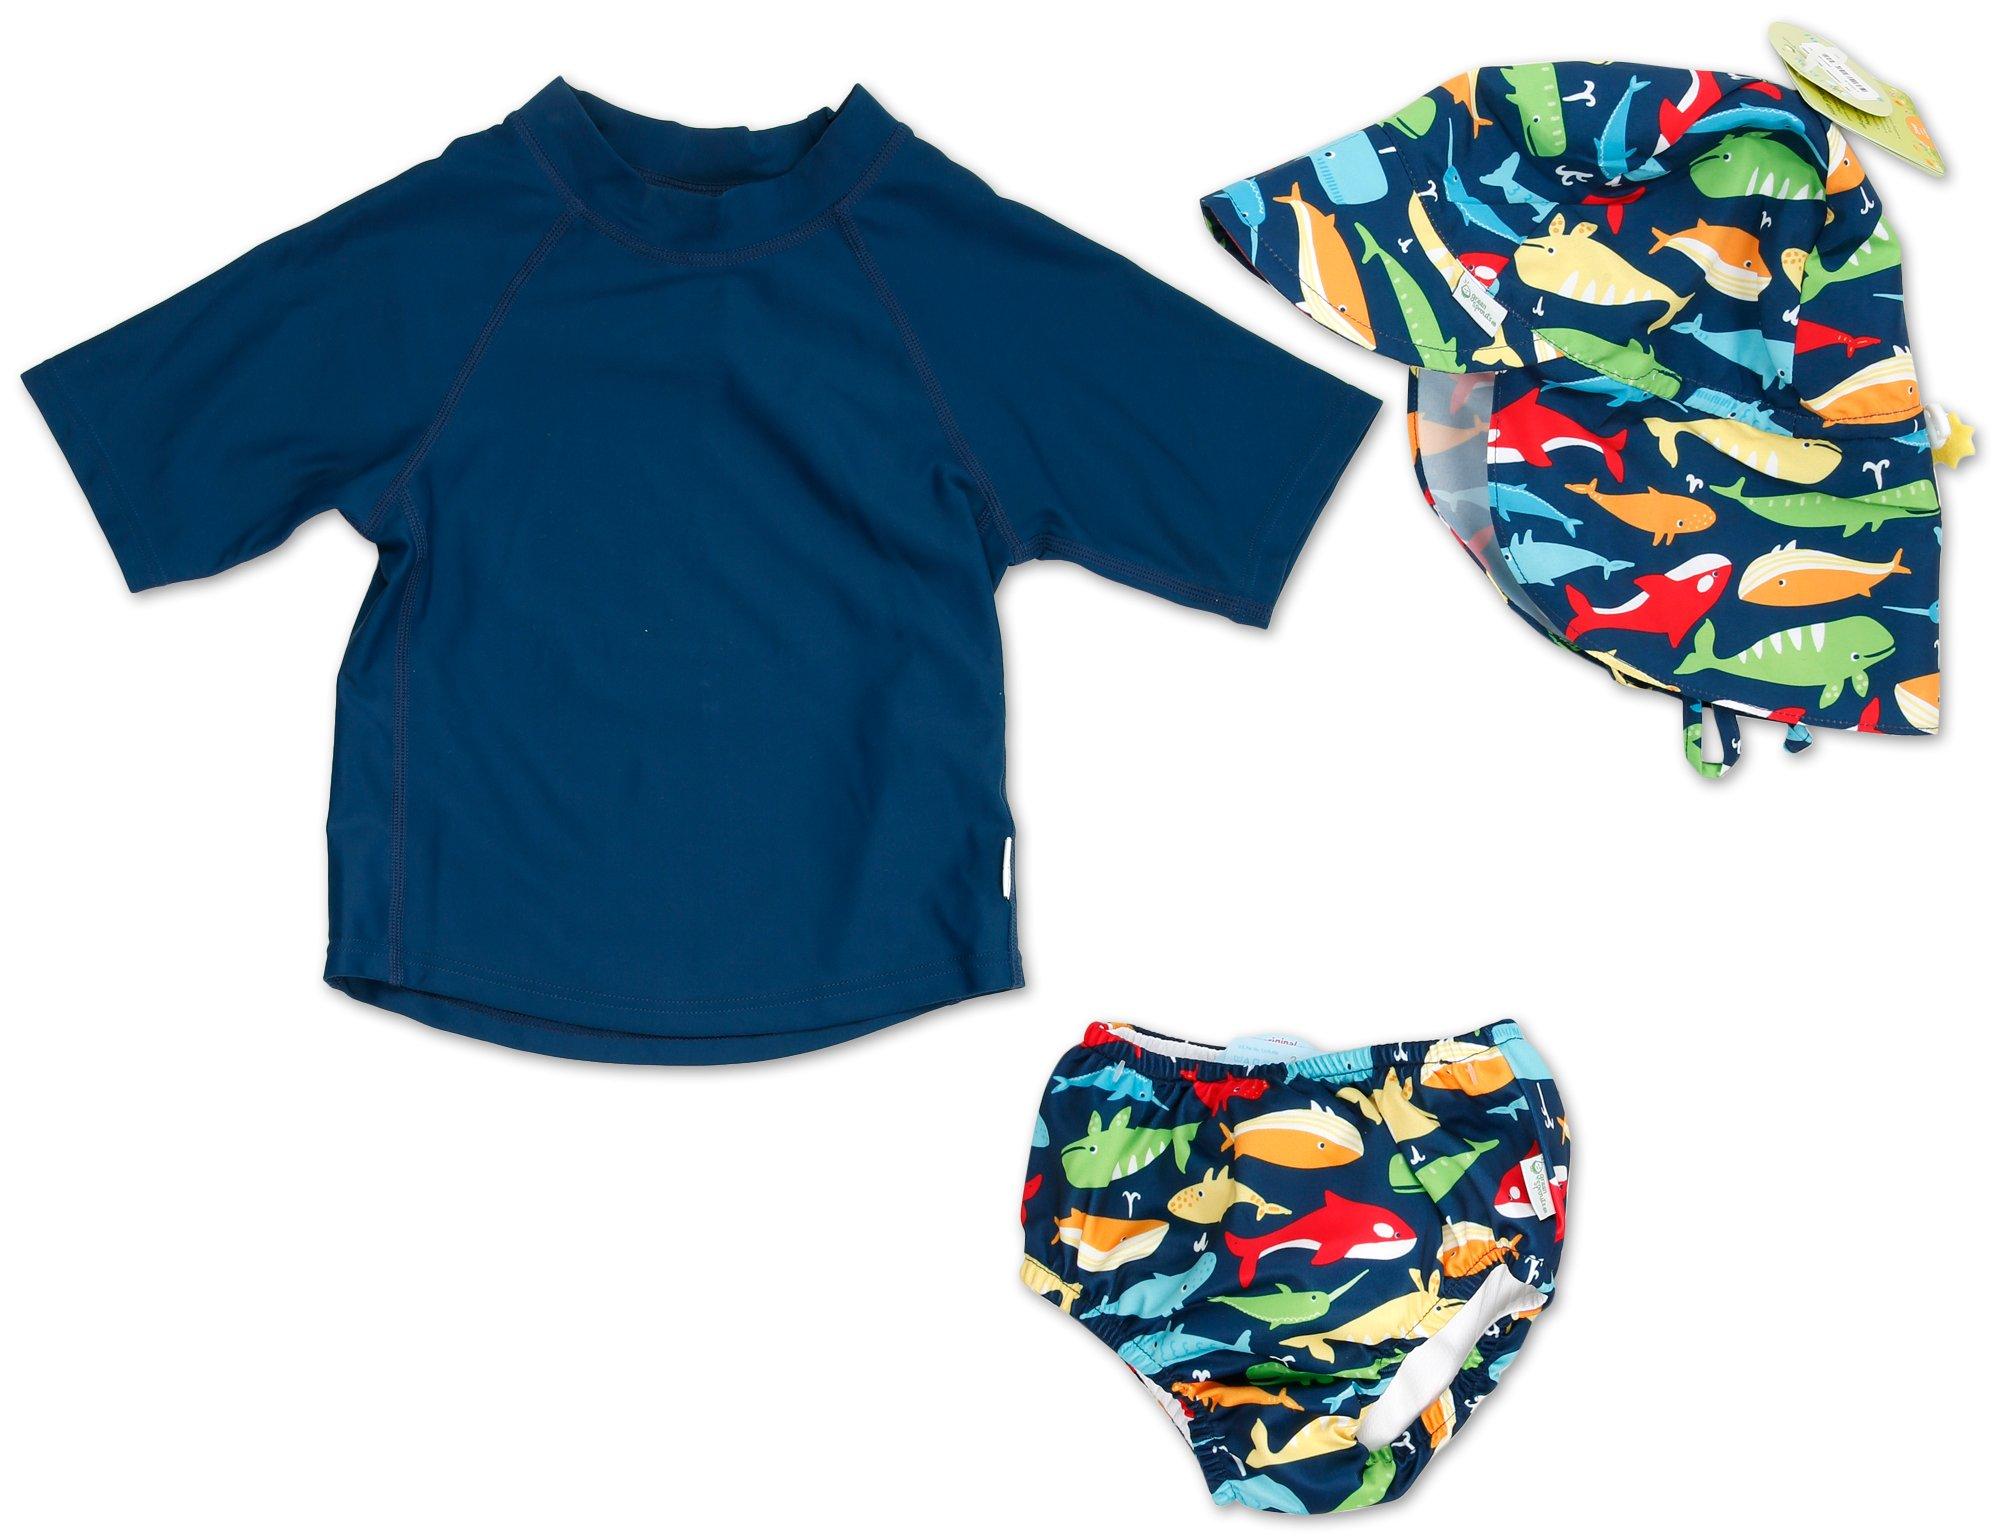 Toddler Boys 3 Pc Swim Suit Set